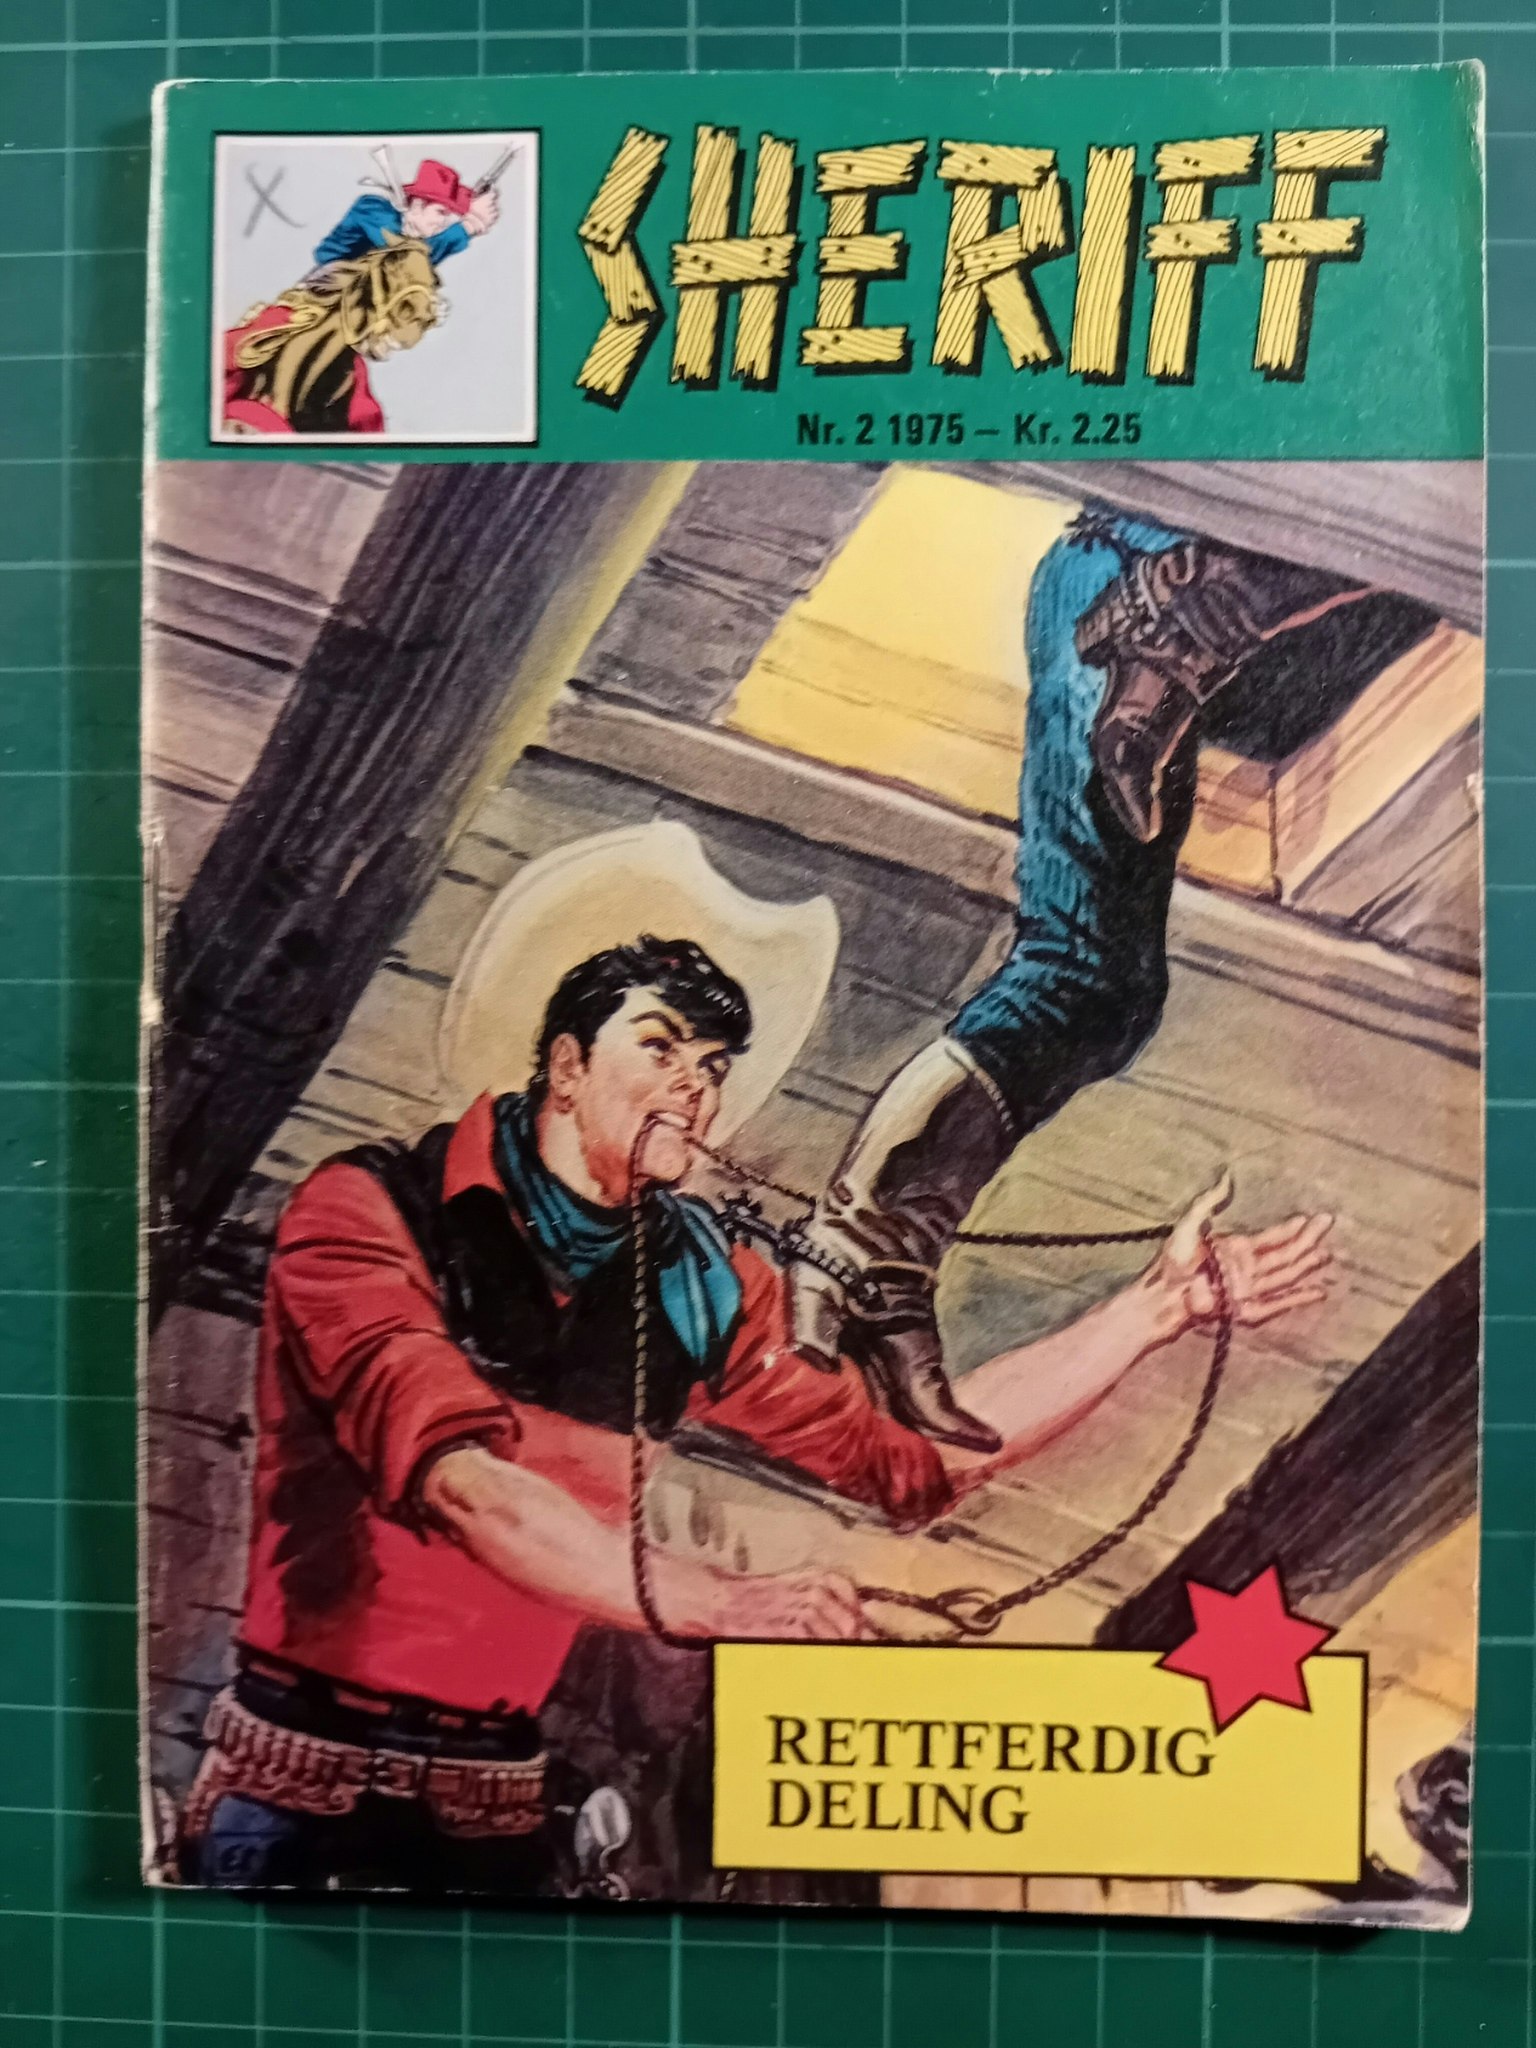 Sheriff 1975 - 02